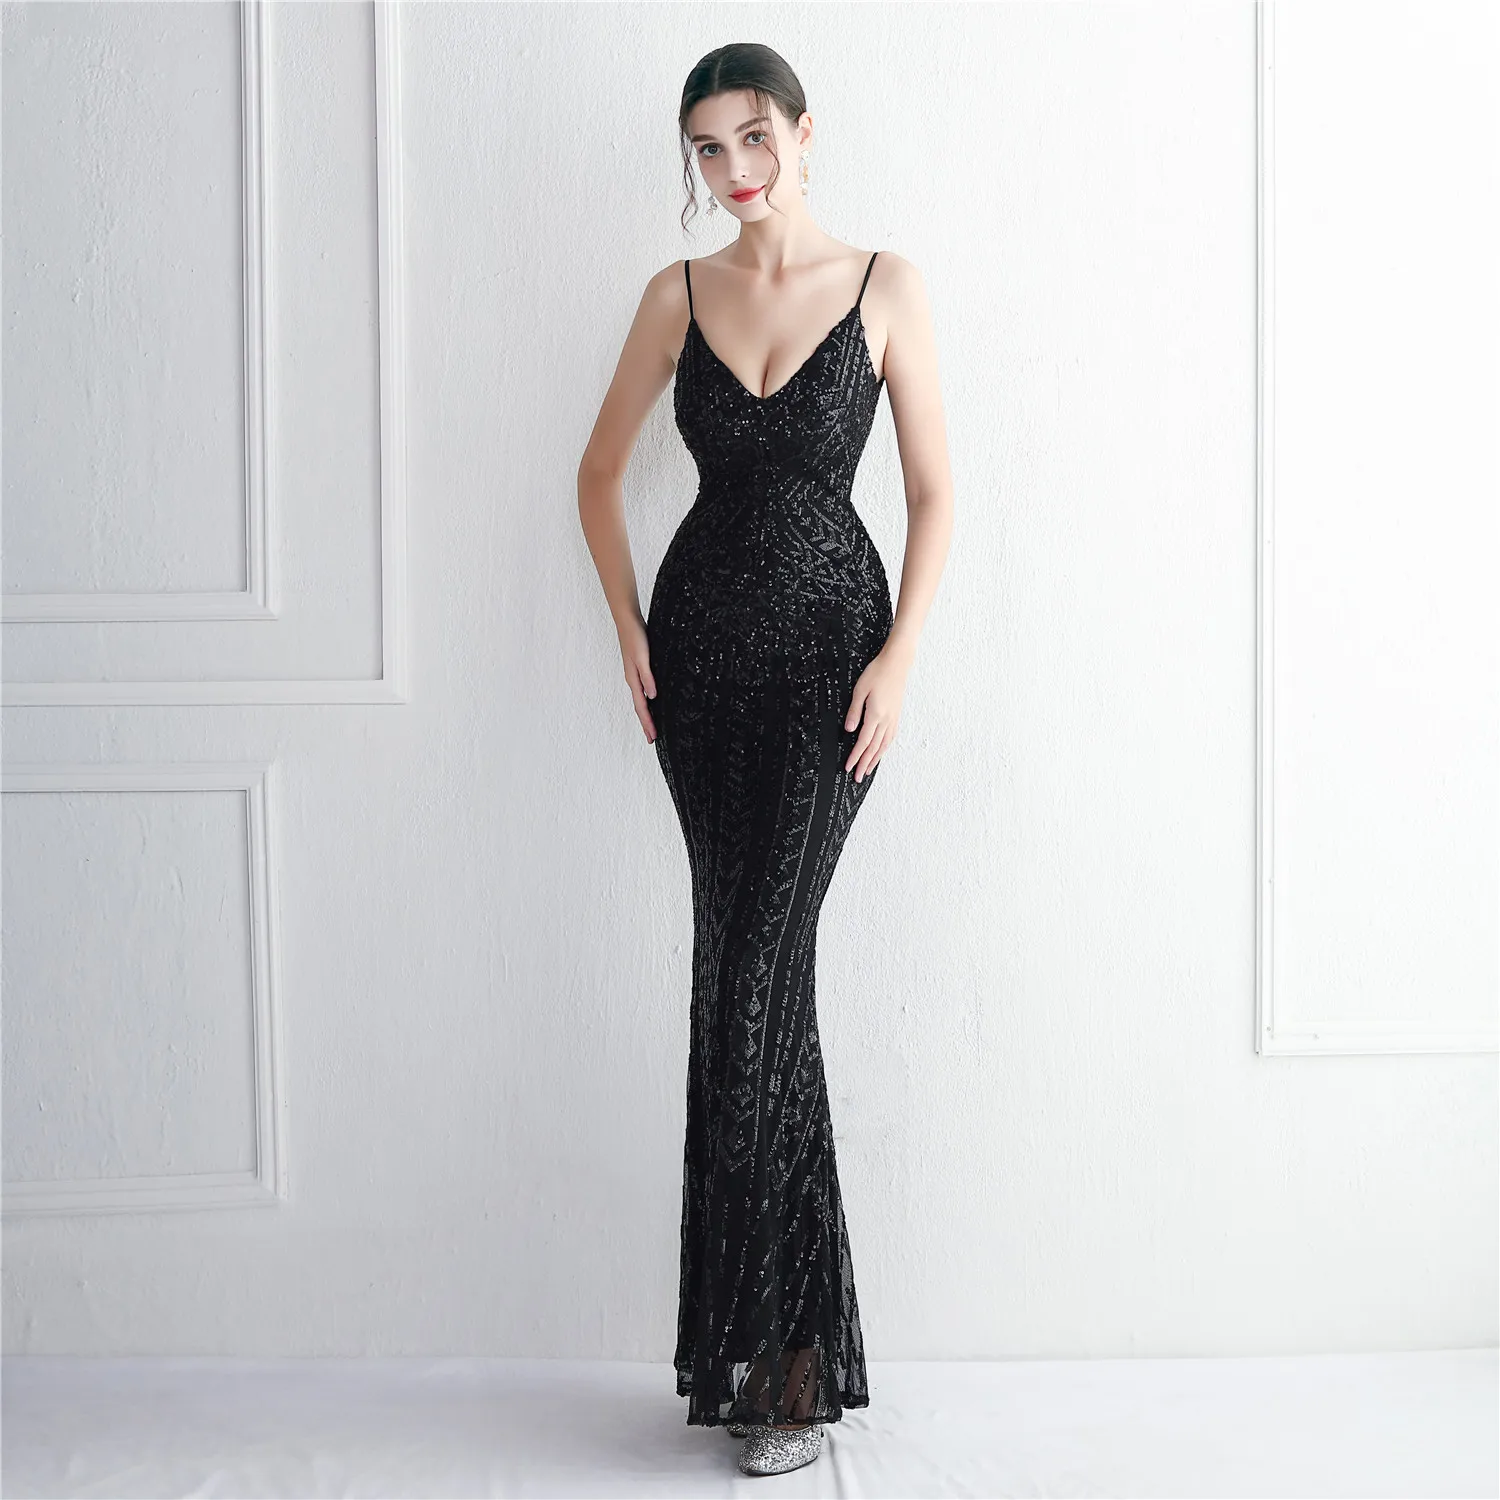 Women's Black Long Sleeve Padded Strap Sequin Dress Length, Sparkles Stretch, V Neck Mermaid, Formal Evening Dress, Night Party